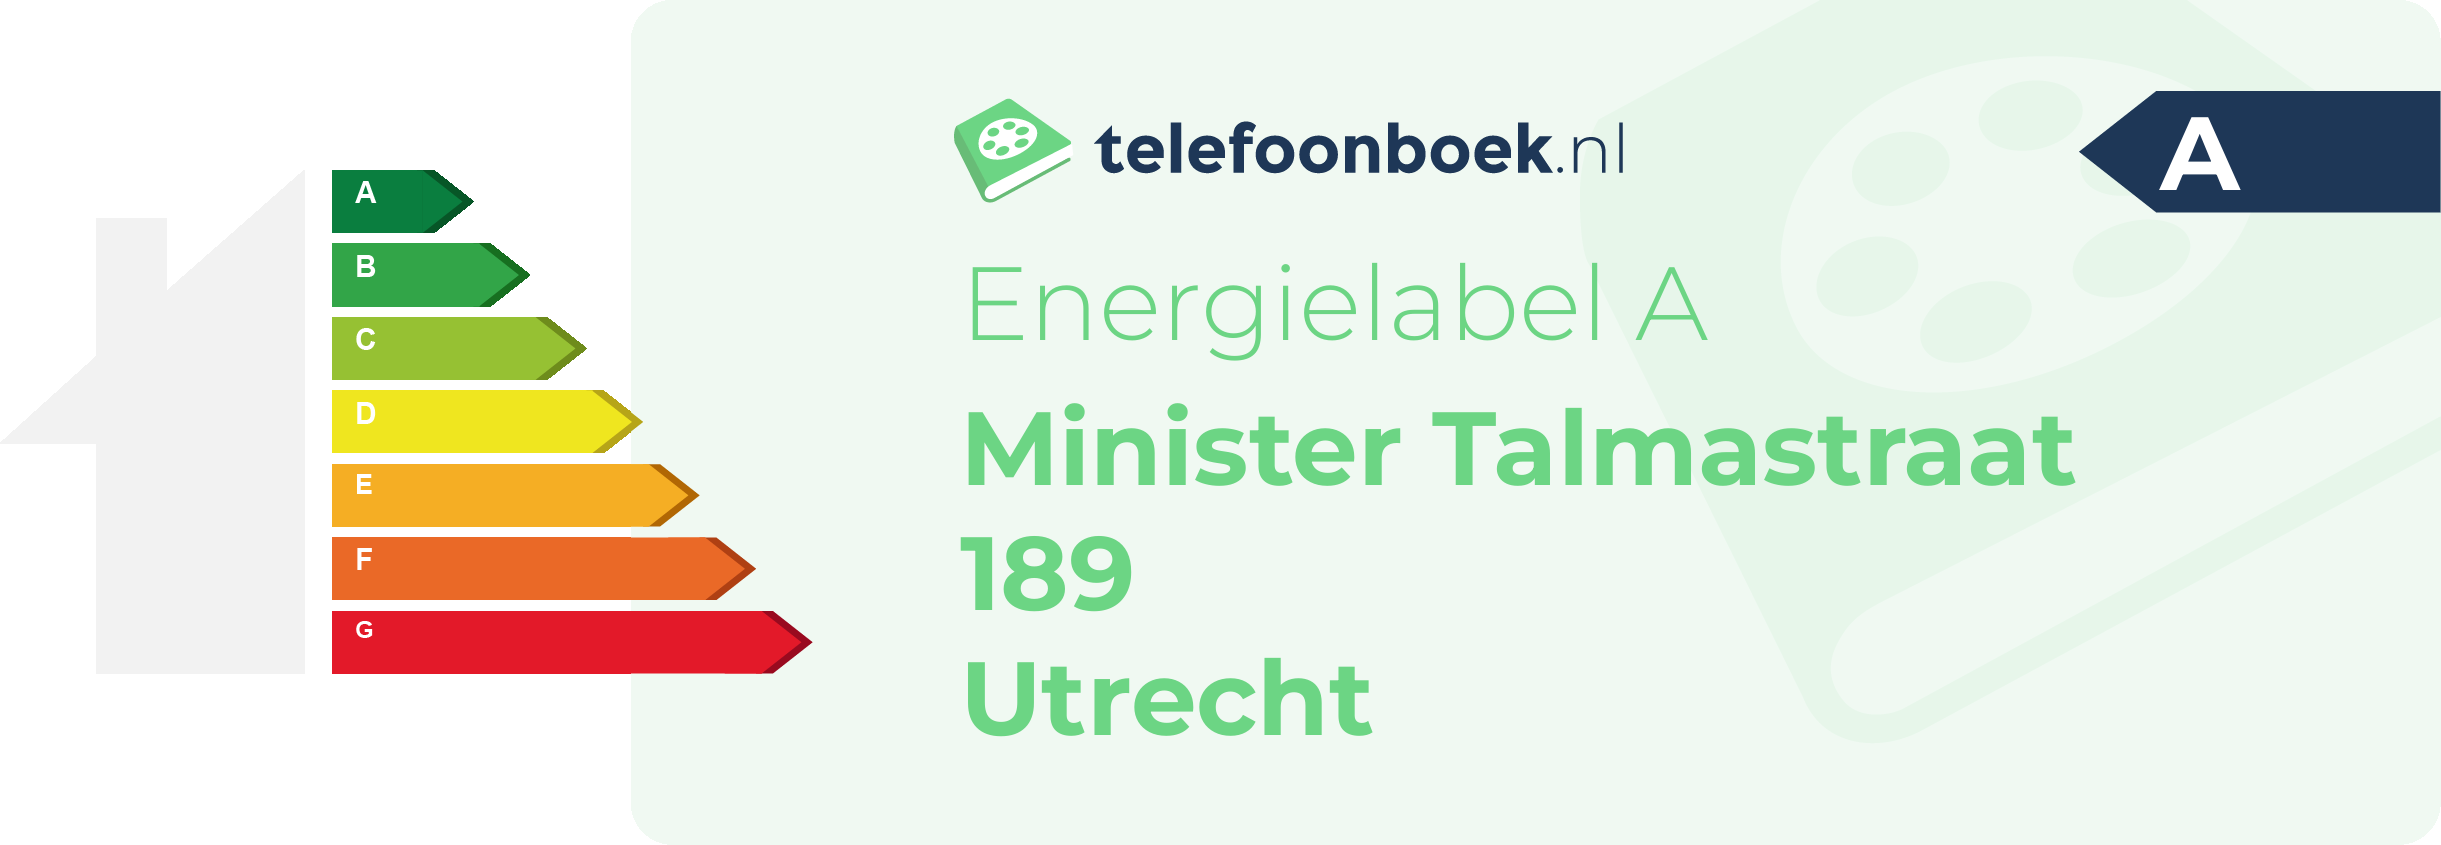 Energielabel Minister Talmastraat 189 Utrecht